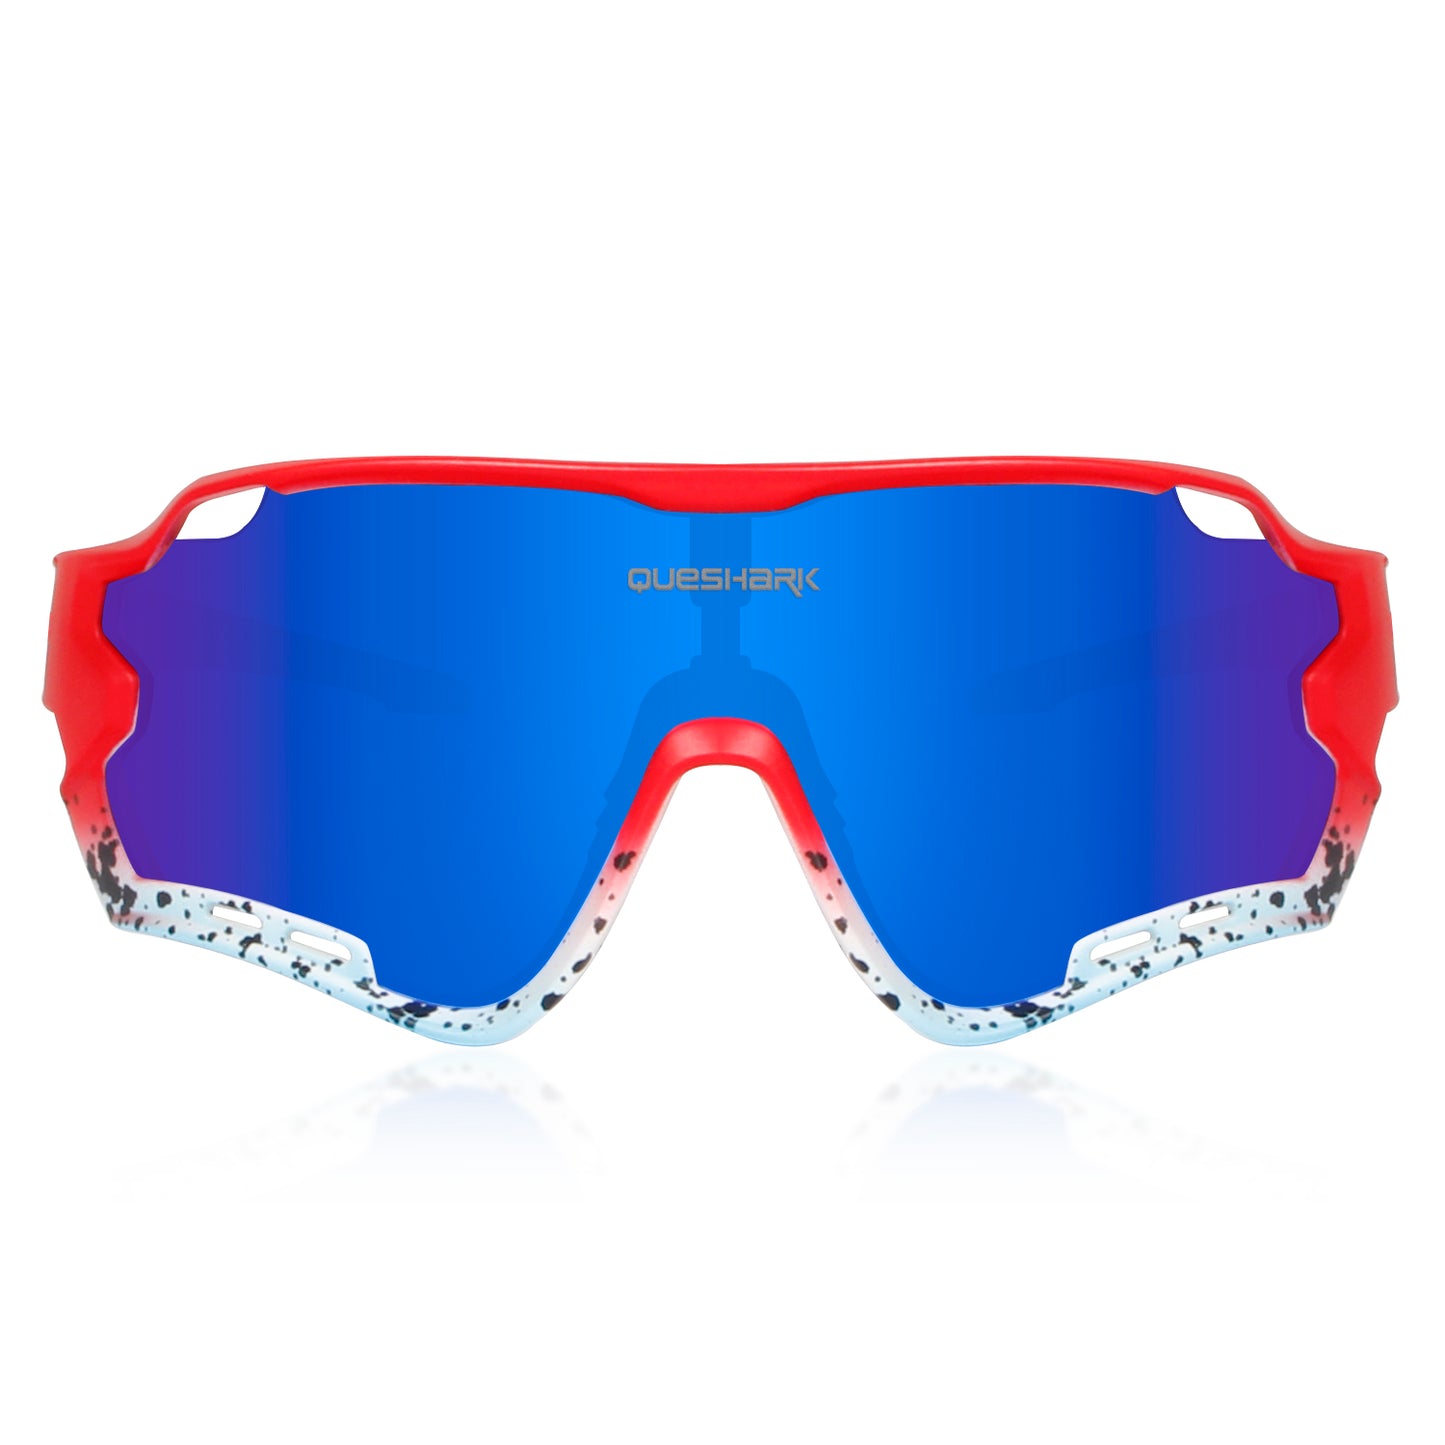 QE44 Red Blue Polarized Cycling Sunglasses UV400 Bike Glasses Sport Eyewear for Men Women 4 Lens